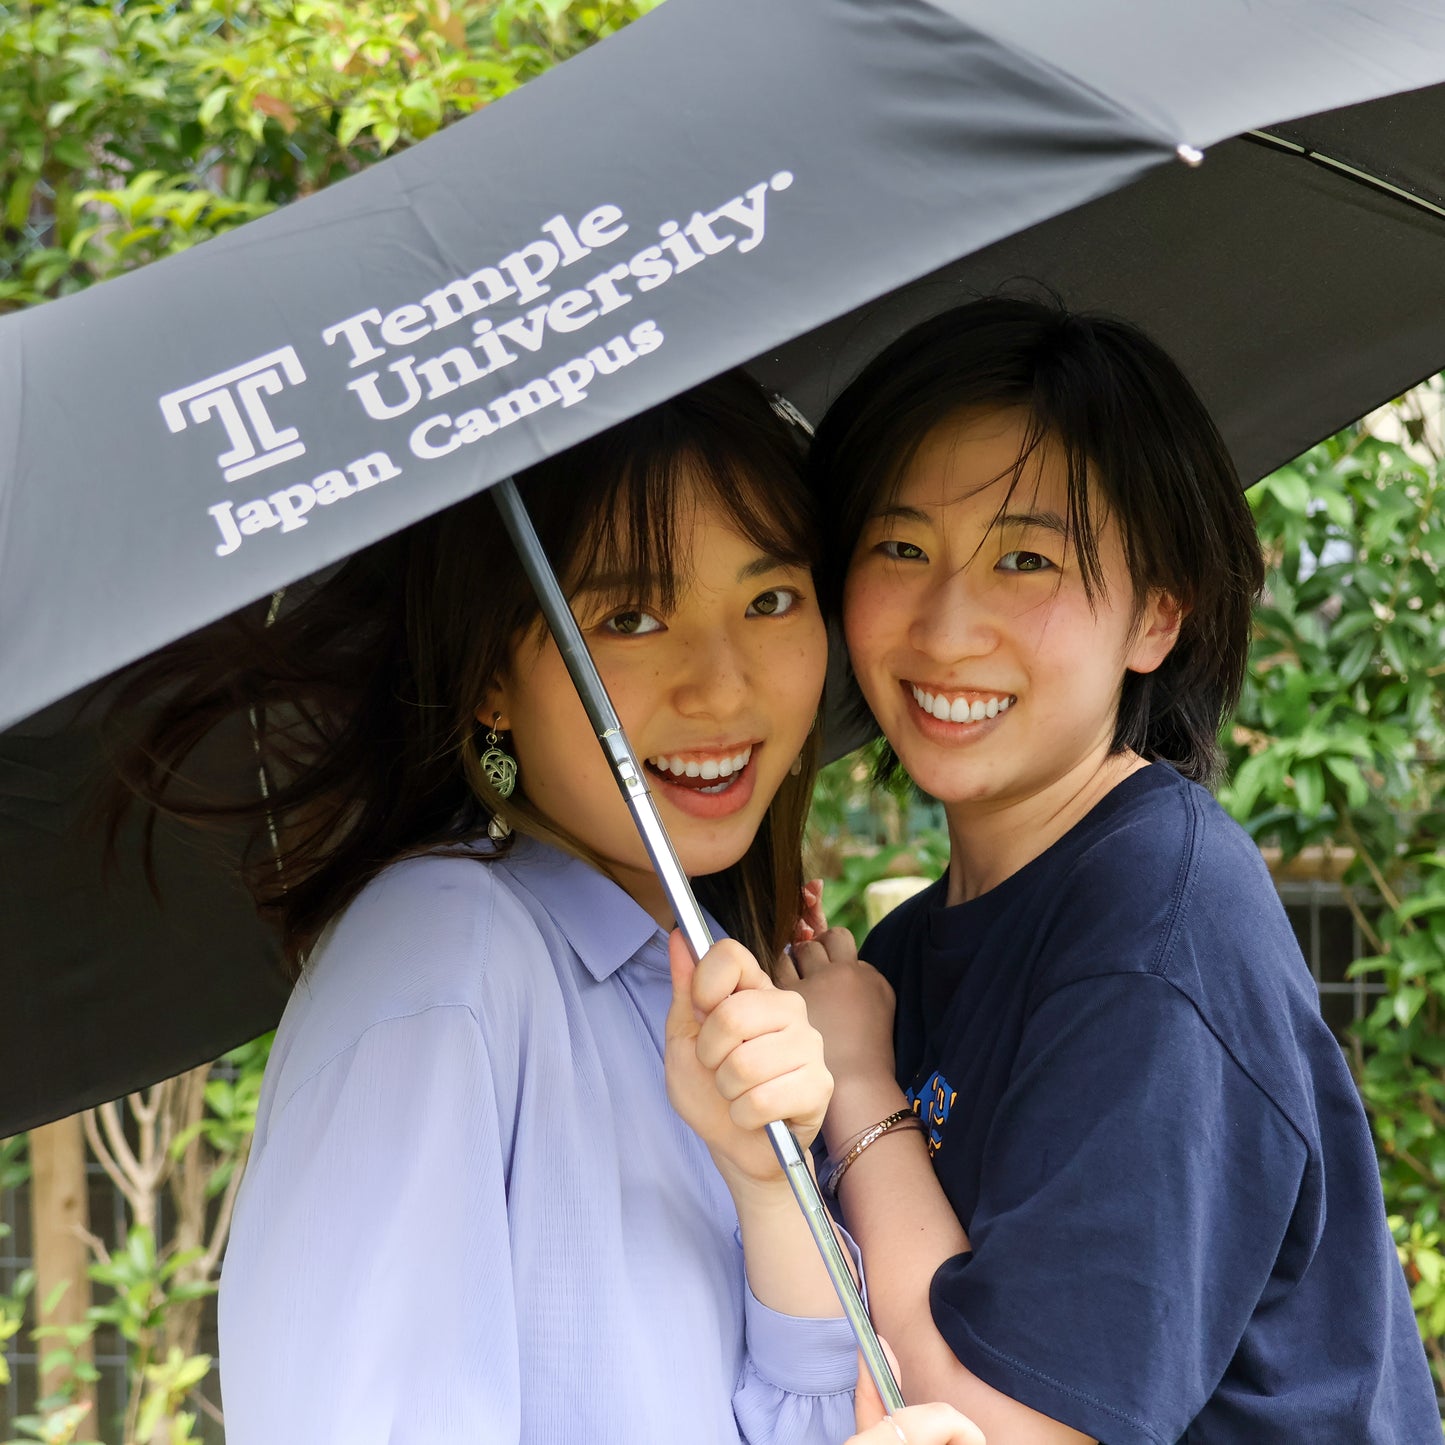 TUJ Compact Folding Umbrella Black